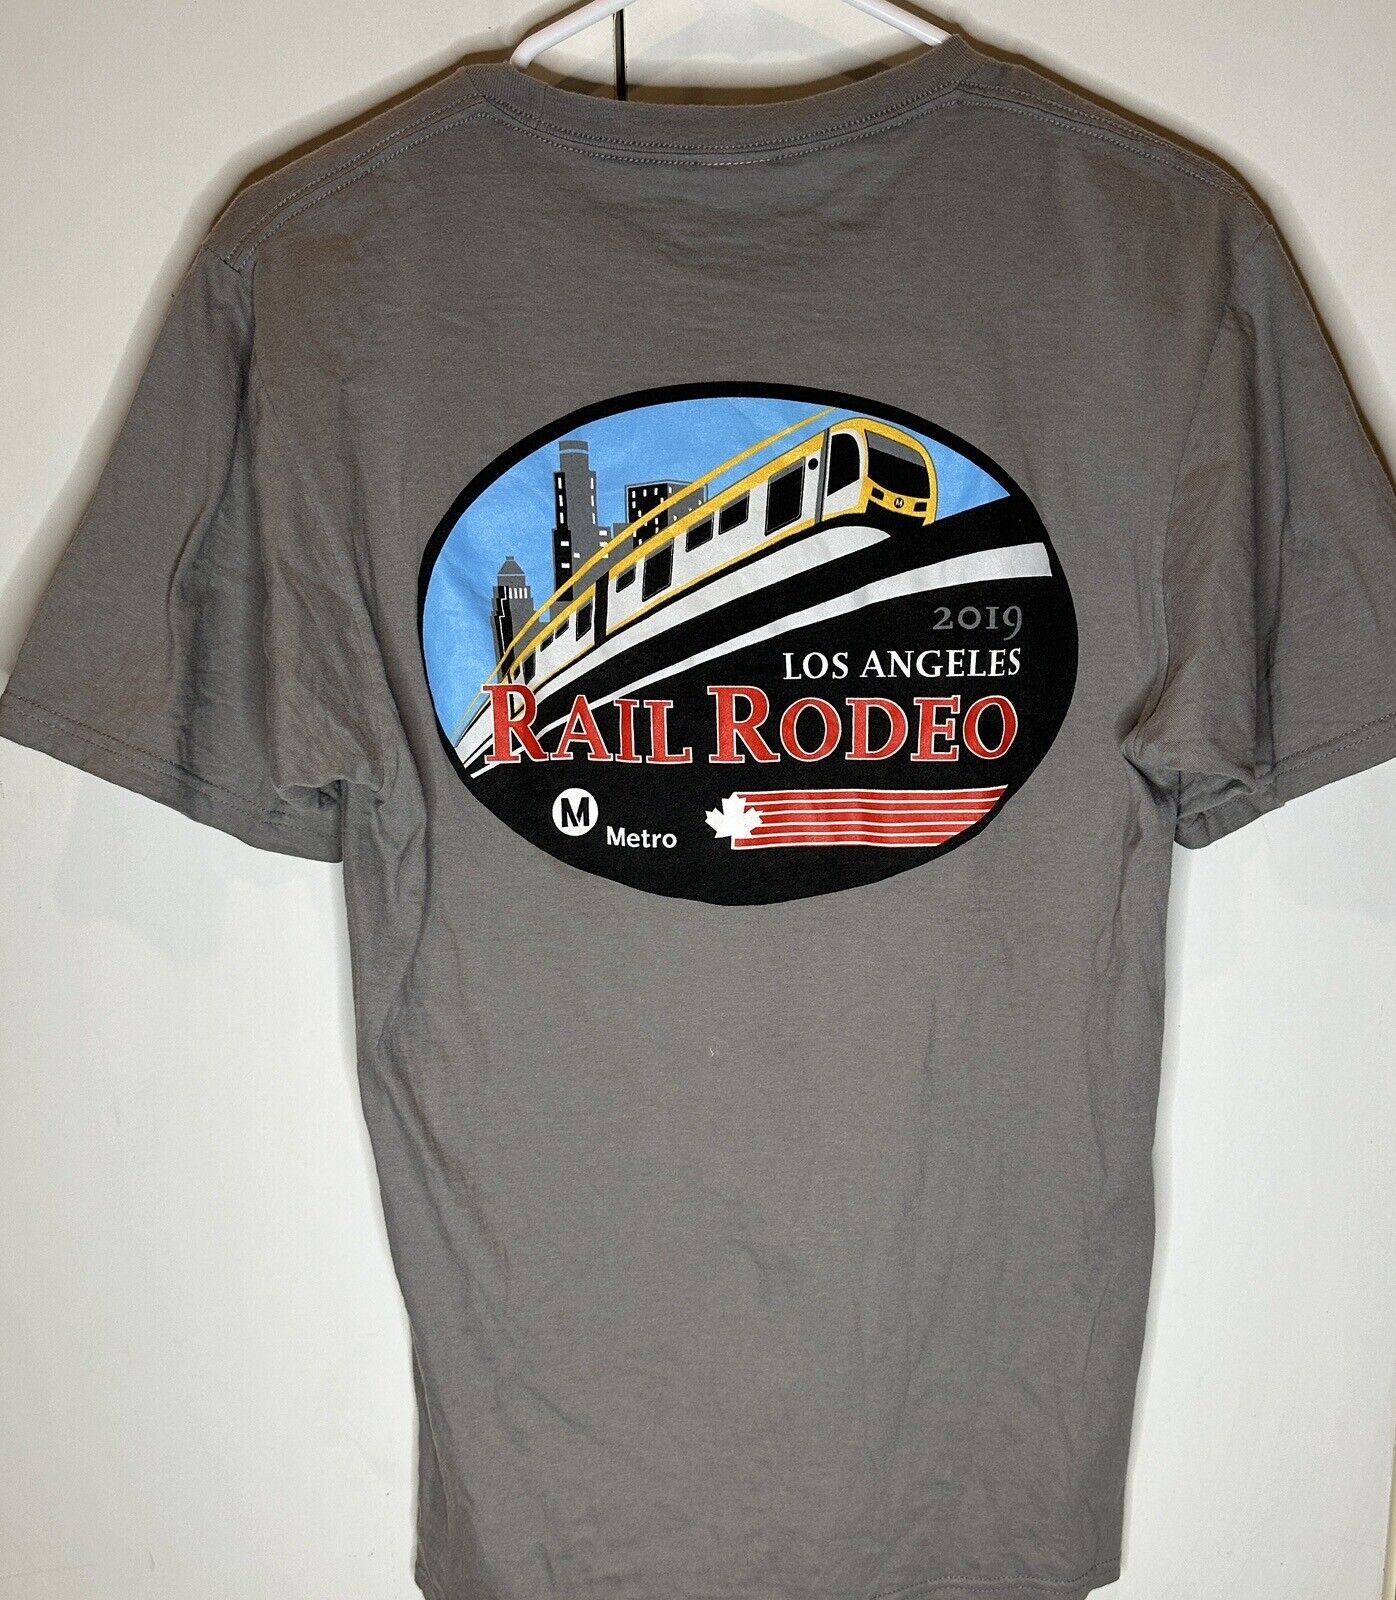 Los Angeles Metro 2019 Rail Rodeo T-Shirt - Small